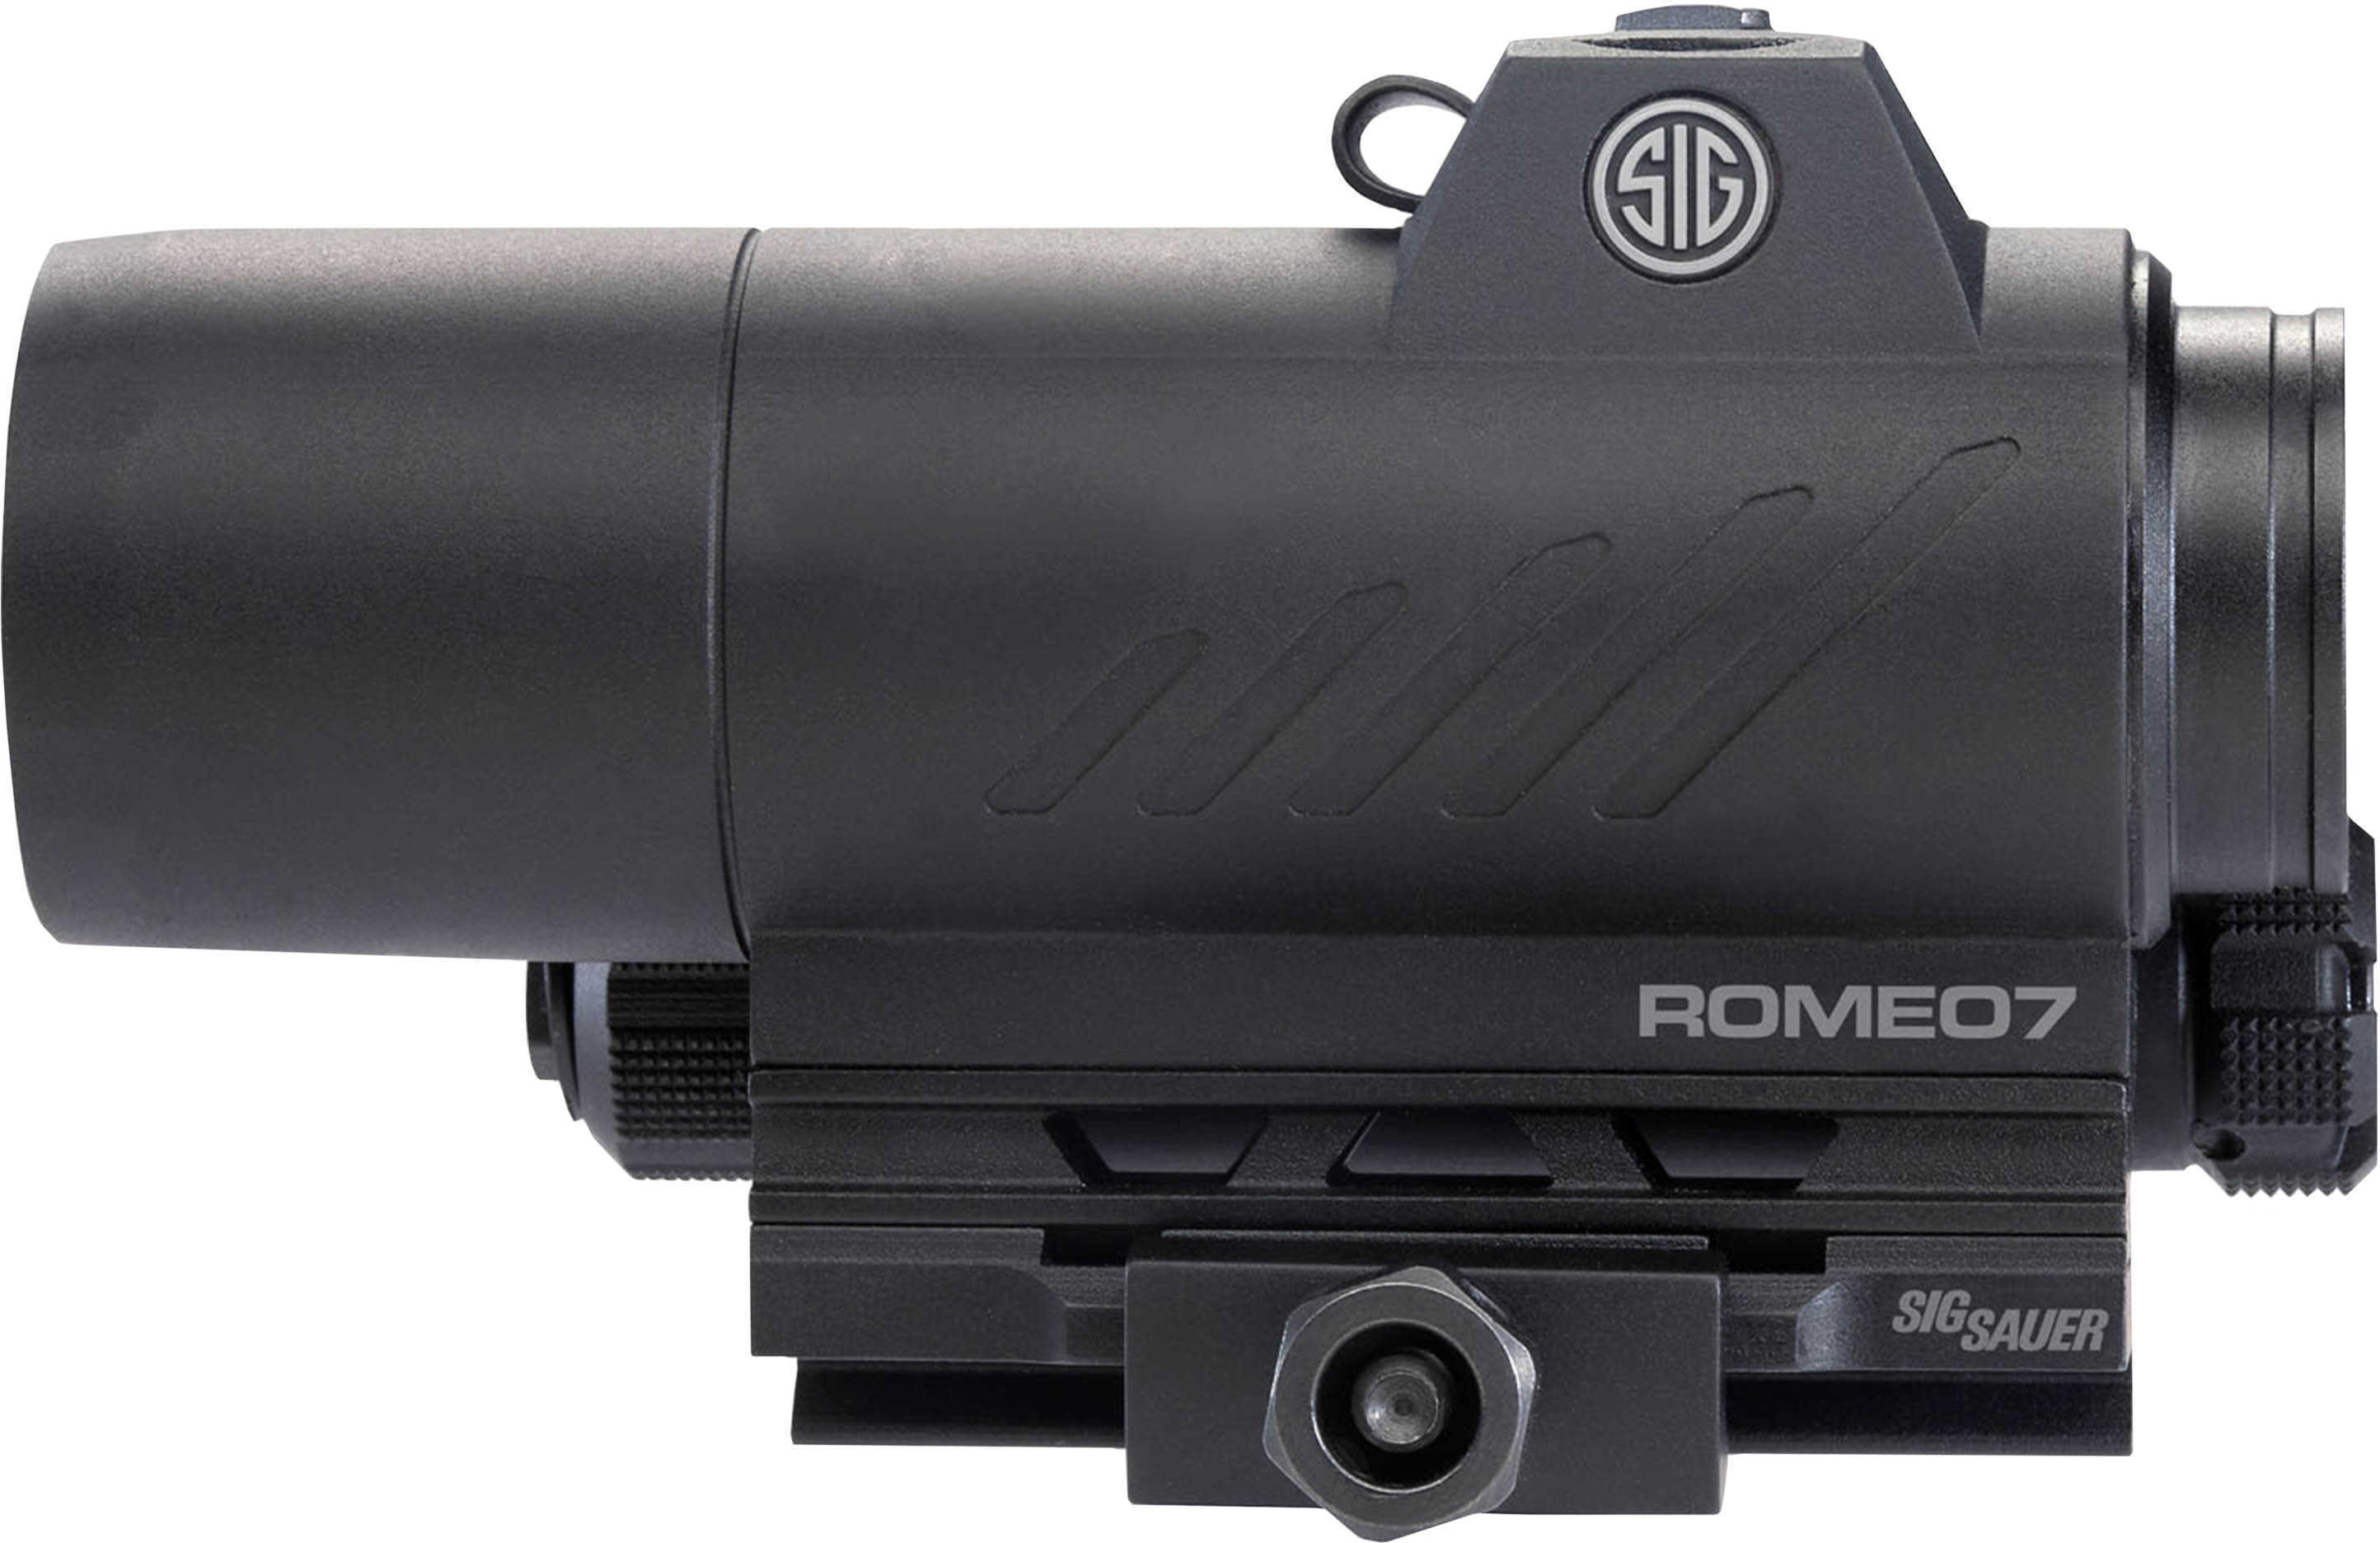 Sig Sauer ROMEO7 1X30mm 2MOA Red Dot Sight Model SOR71001